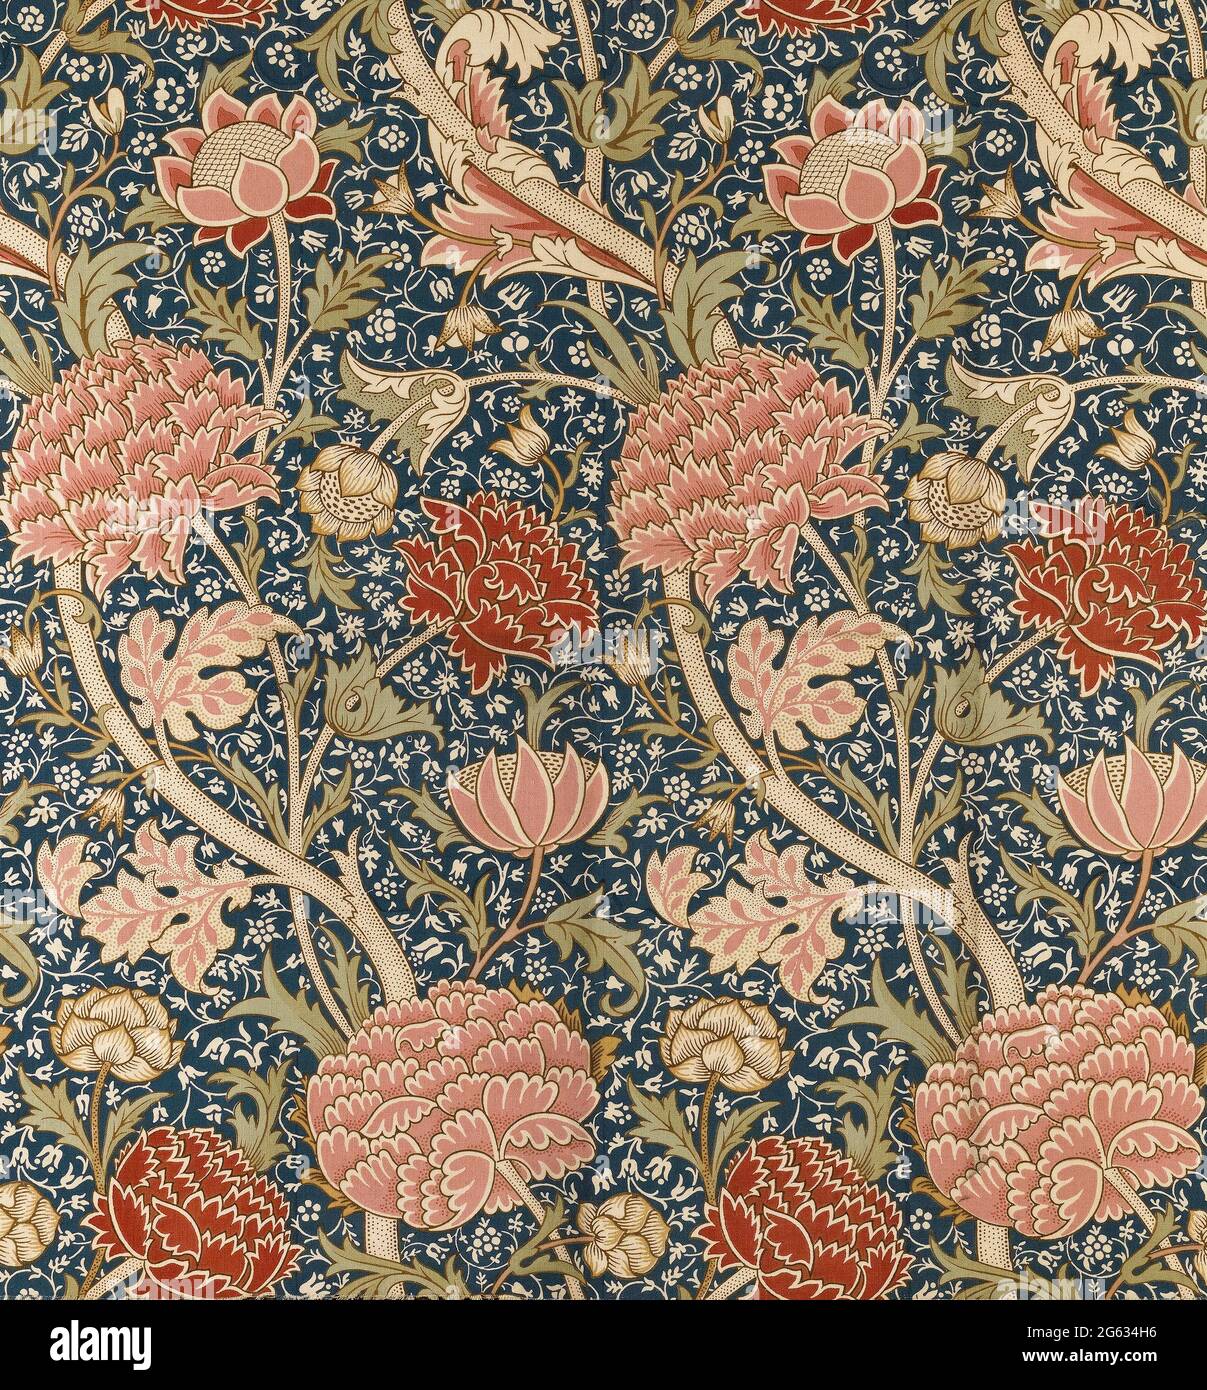 William Morris, fabric pattern, Cray, 1884 Stock Photo - Alamy